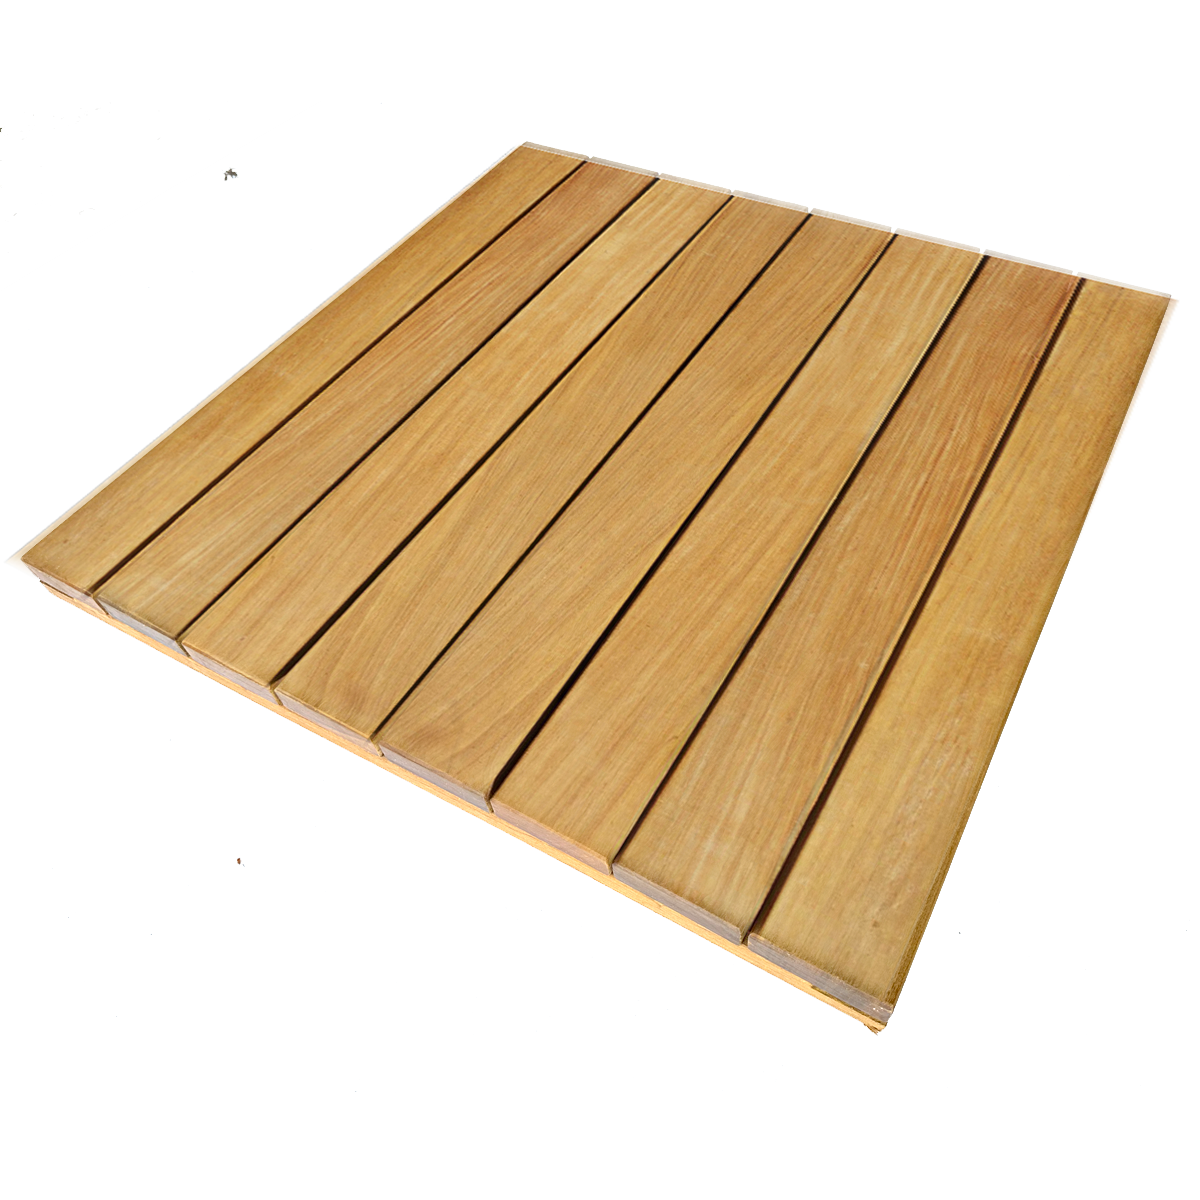 Garapa Structural Deck Tile